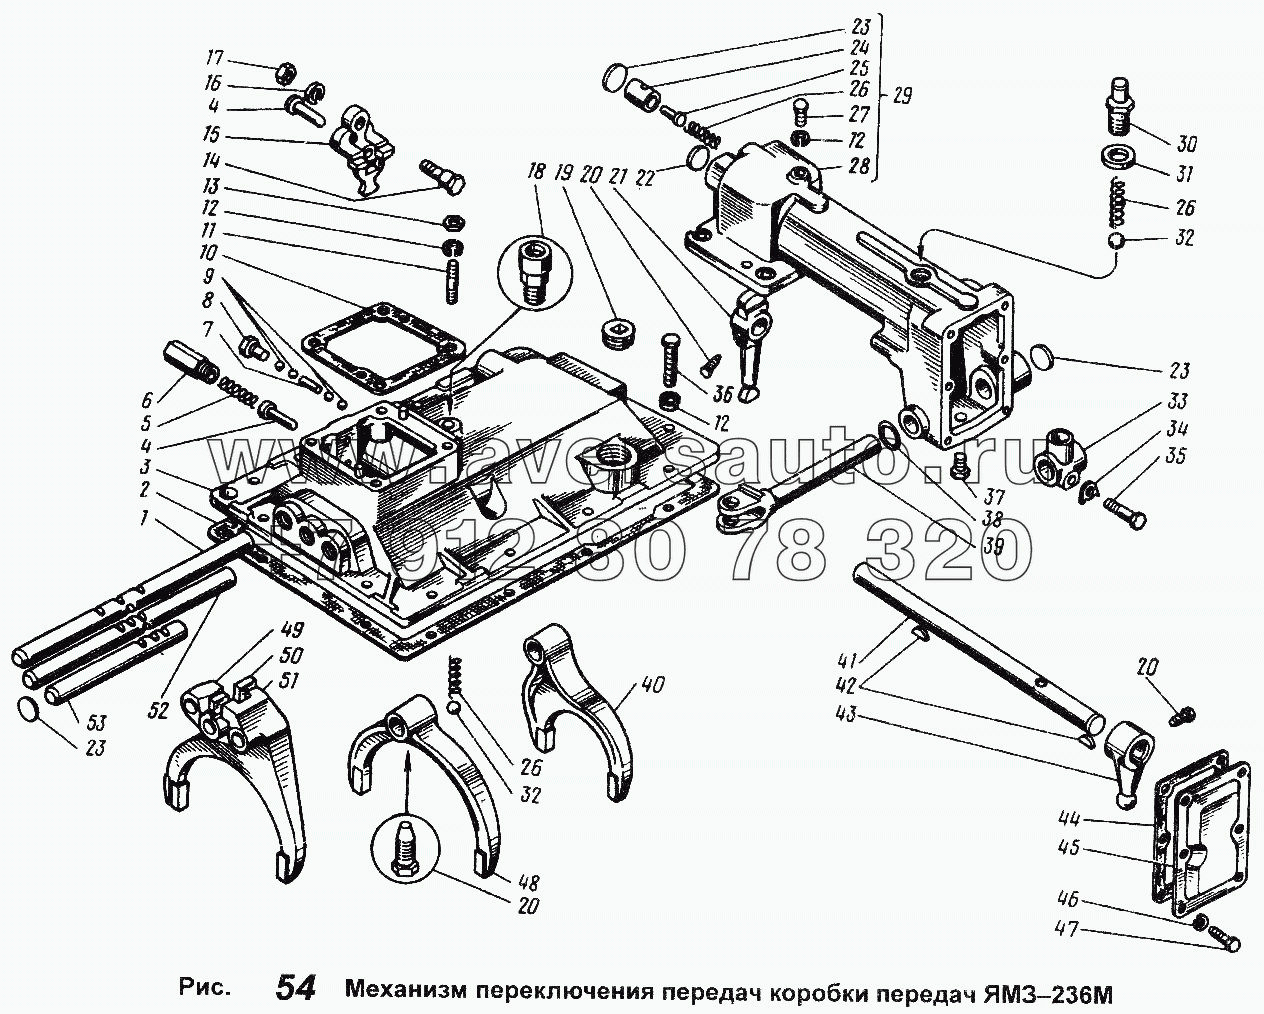 Механизм переключения передач коробки передач ЯМЗ-236М